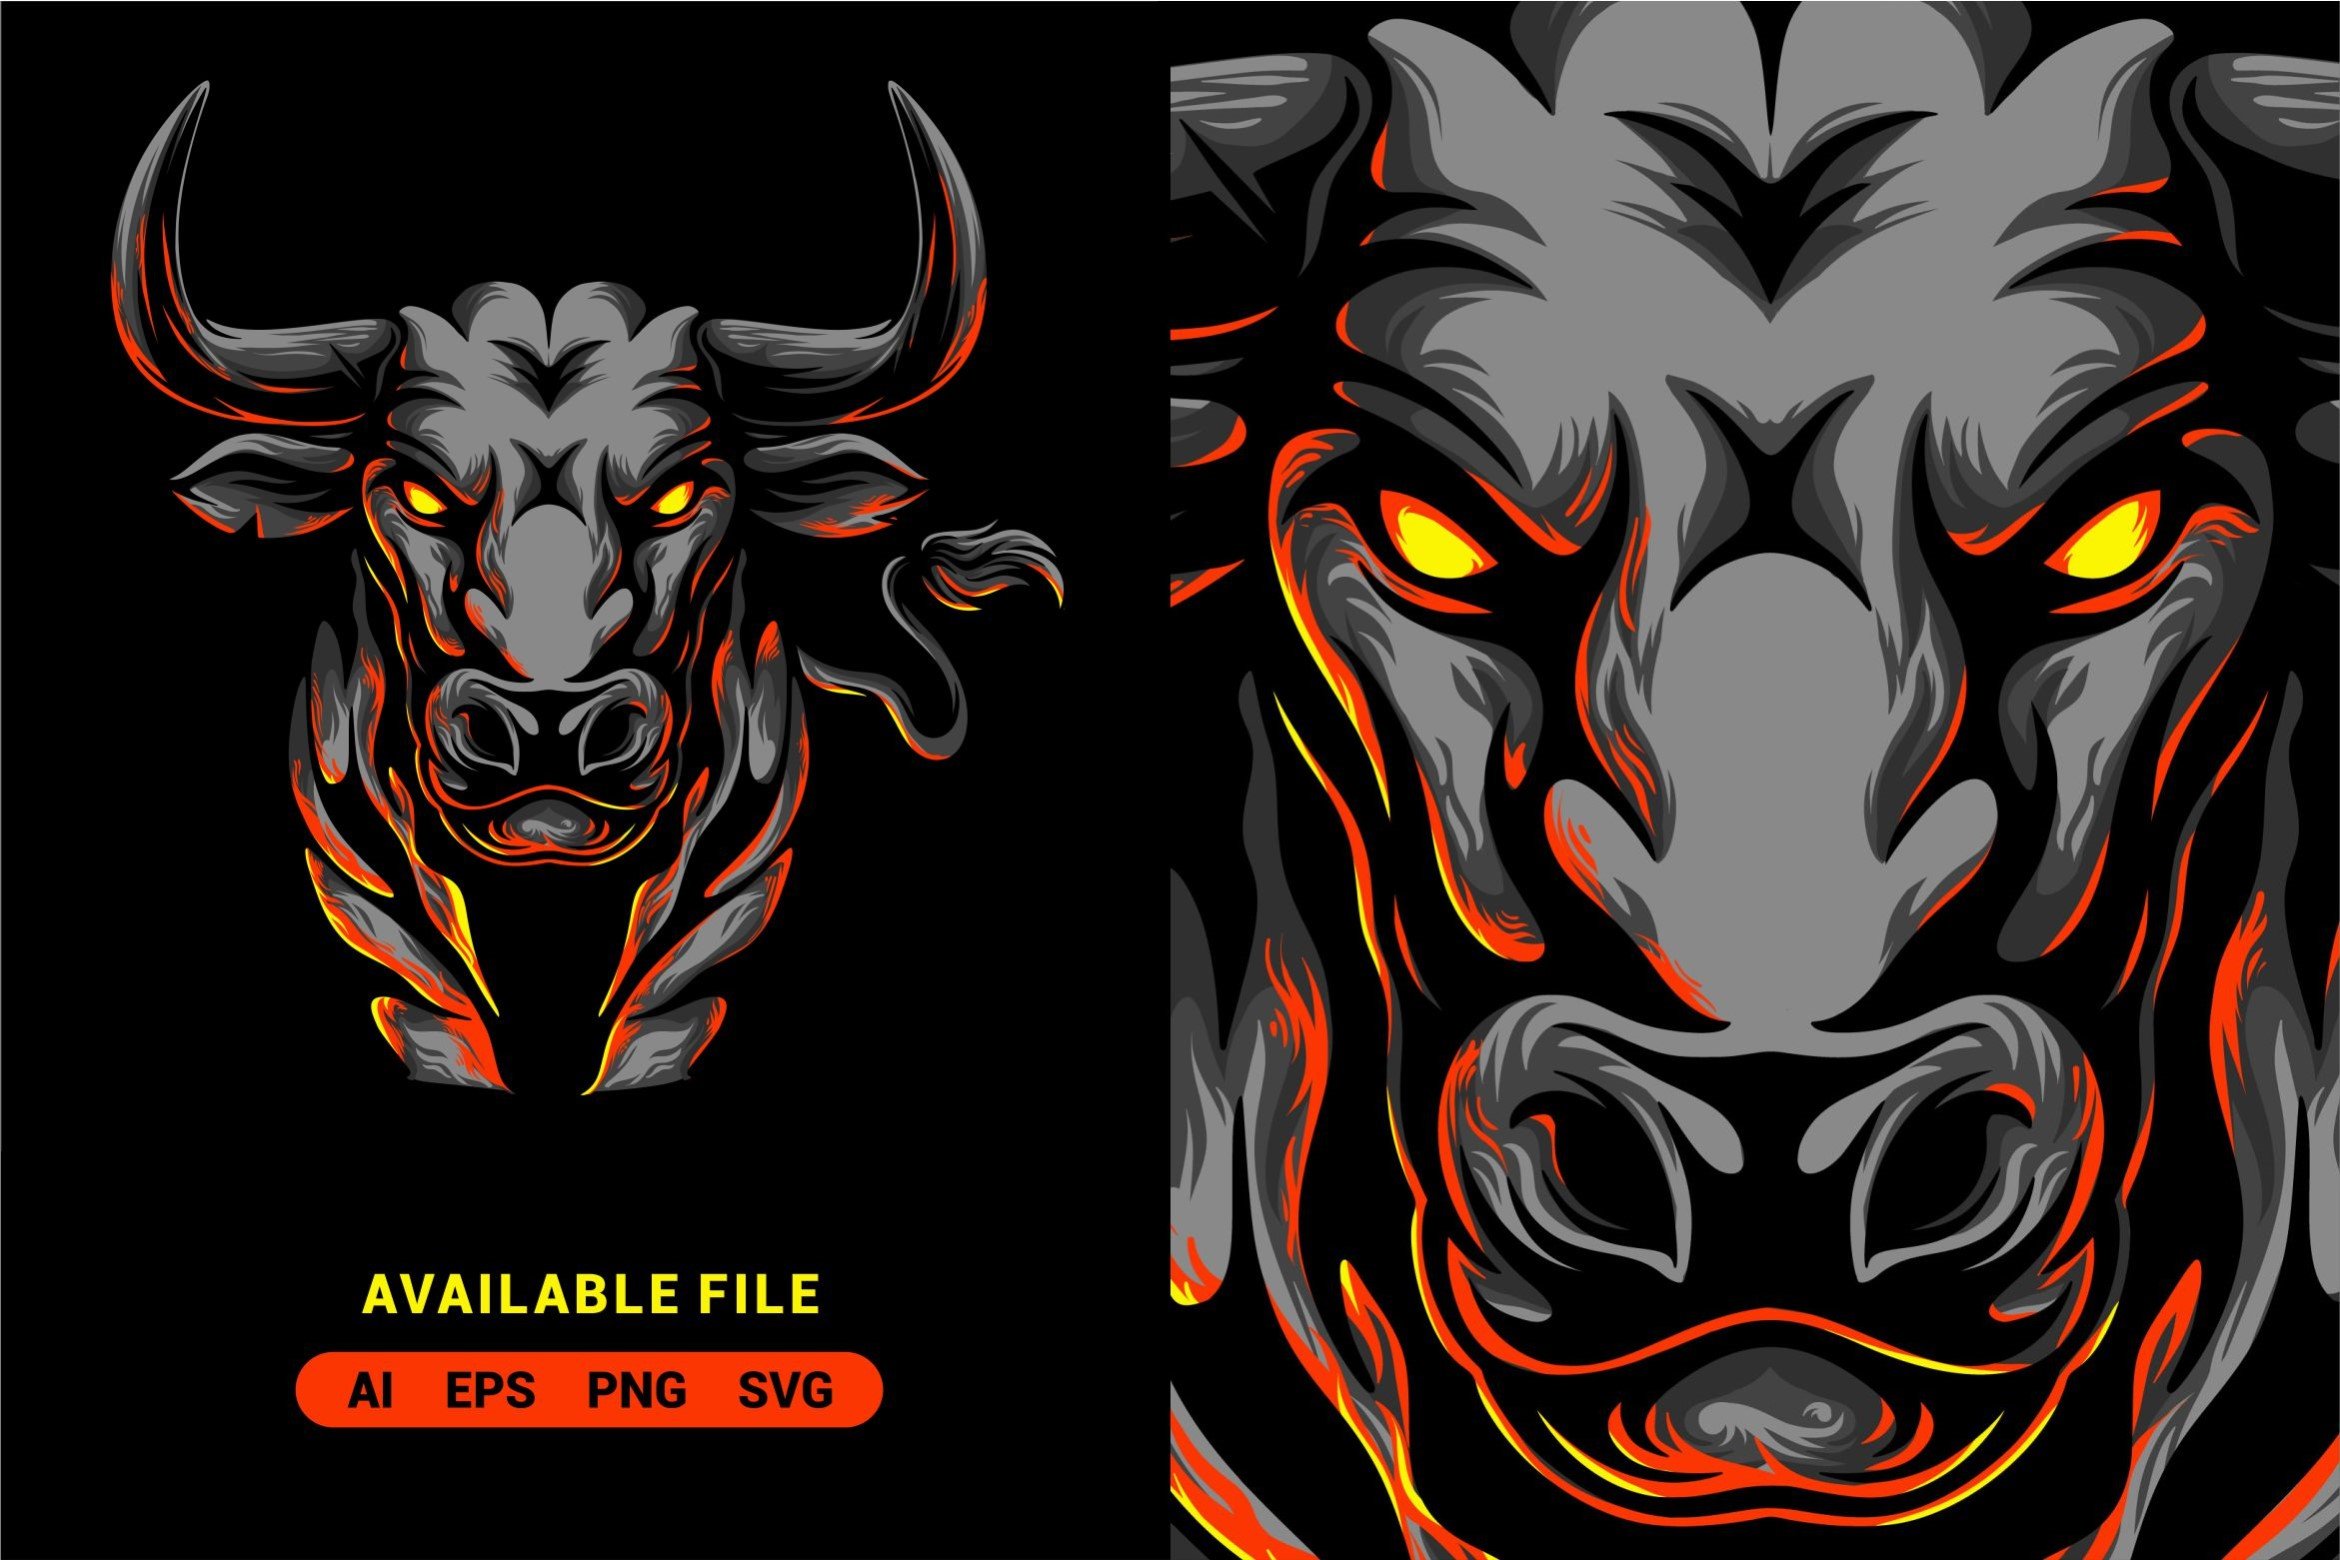 Bull Vector Illustration cover image.